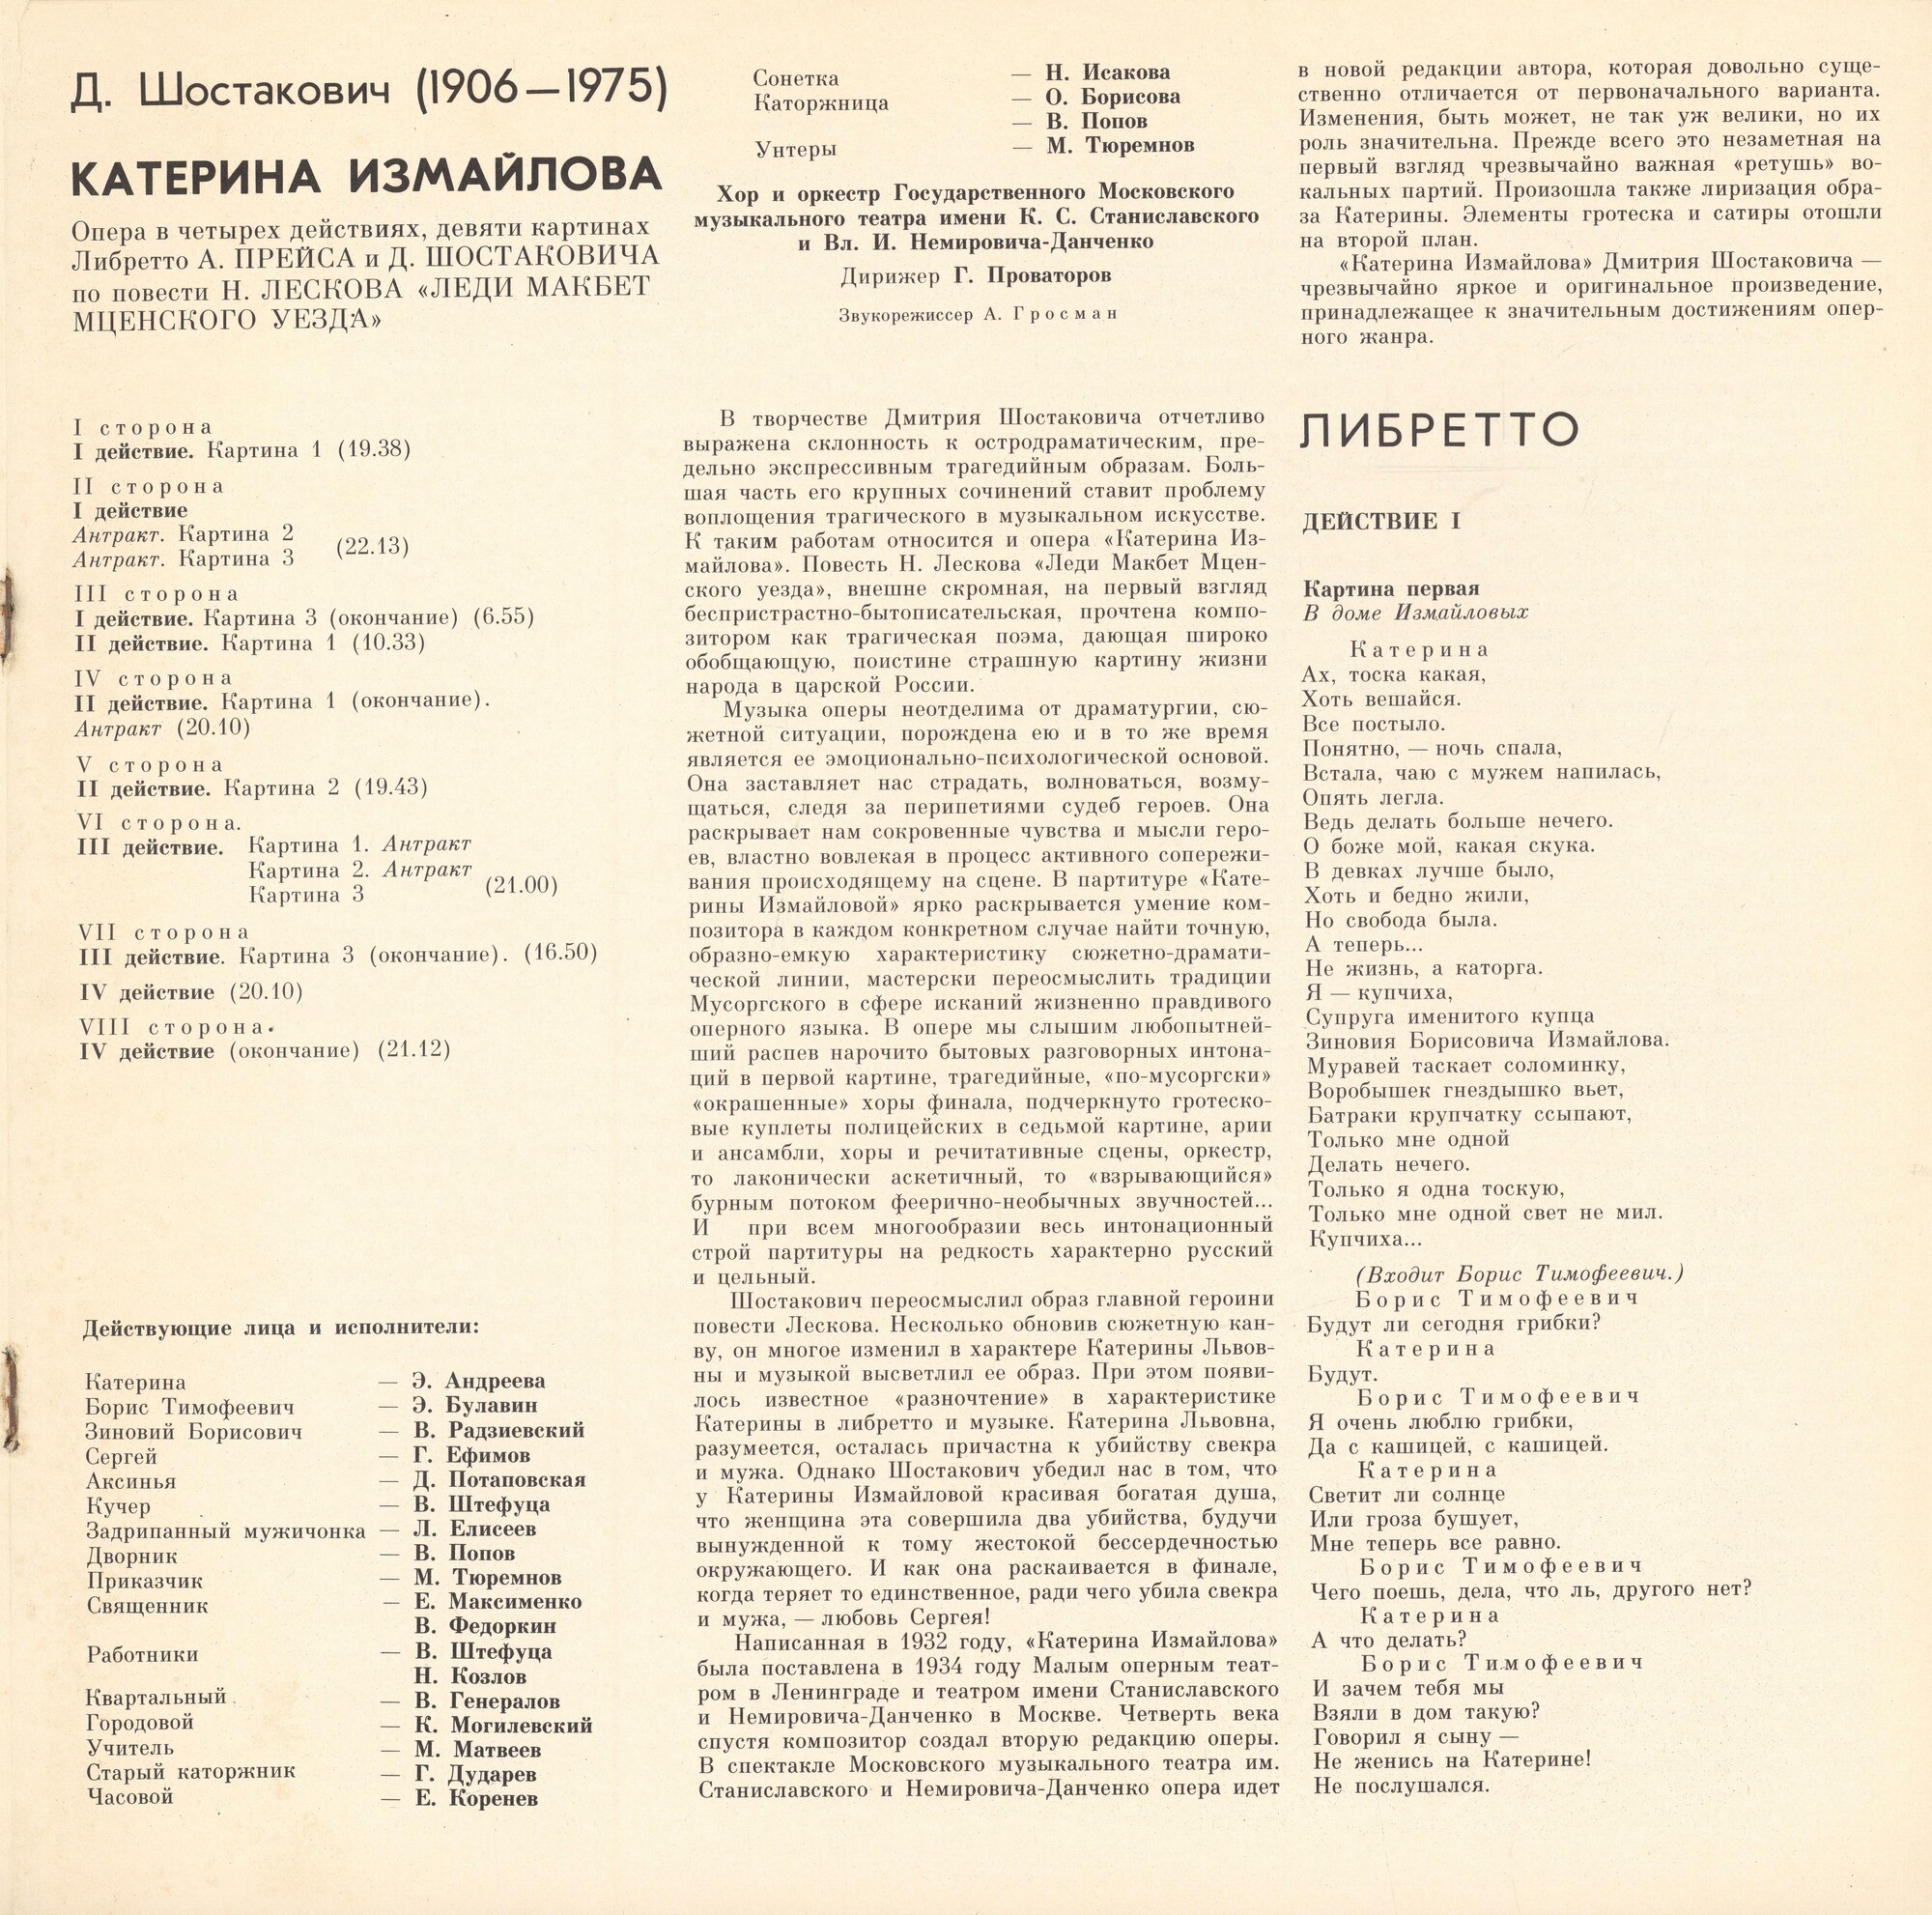 Д. Шостакович. Собрание сочинений в грамзаписи. Оперы «Нос» и «Катерина Измайлова» (6 пластинок)